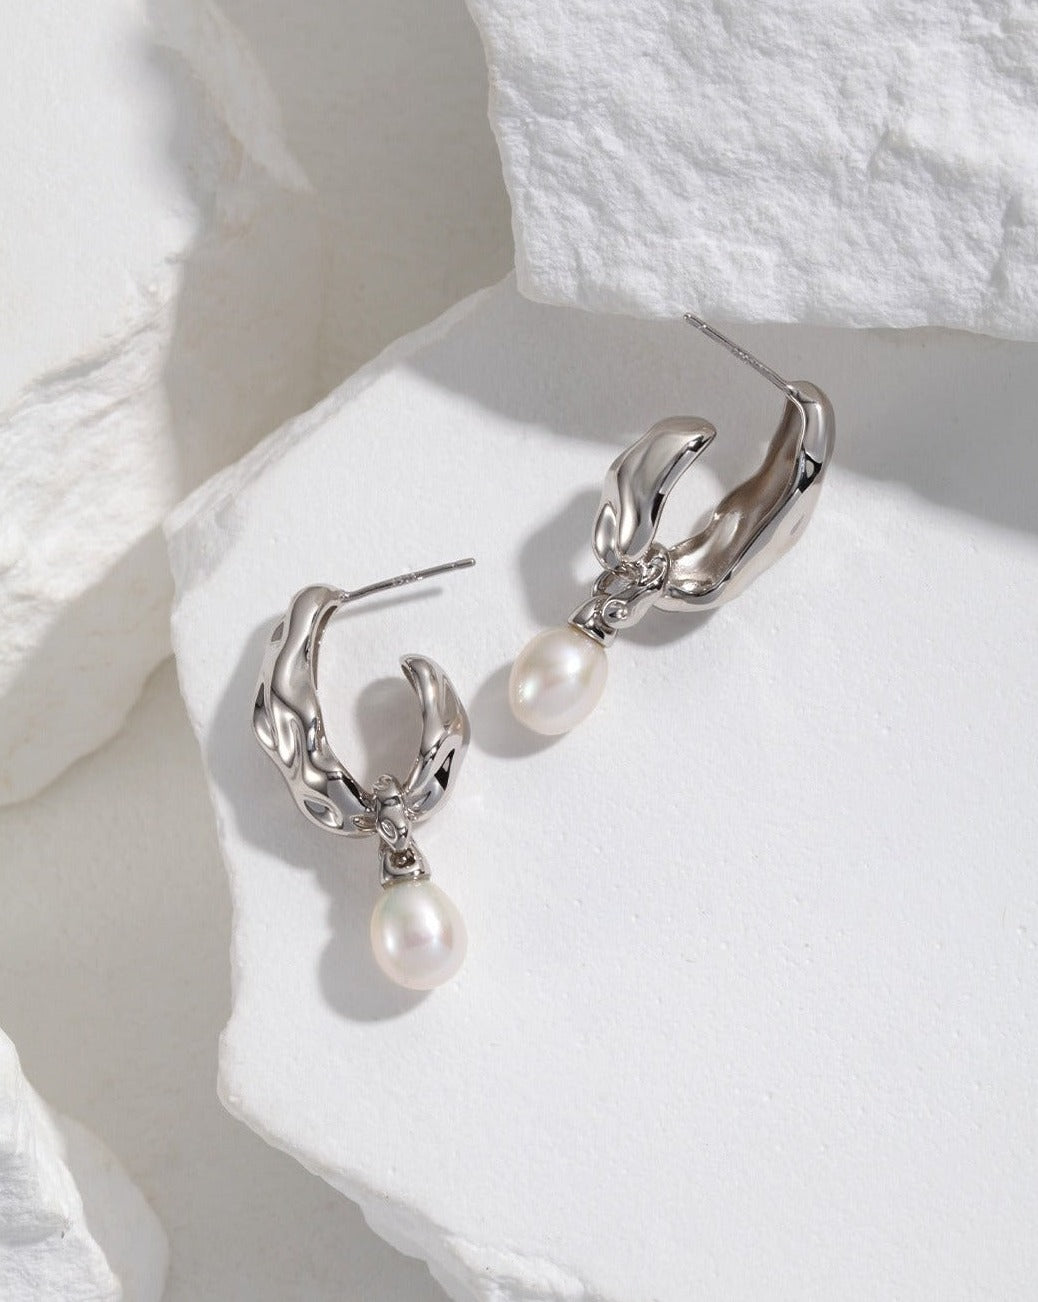 fashion-jewelry-minimalist-jewelry-design-jewelry-statement-necklace-pearl-earring-bracelet-rings-gold-coated-silver-bijoux-retro-gold-jewelry-scarf-shape-pearl-earrings